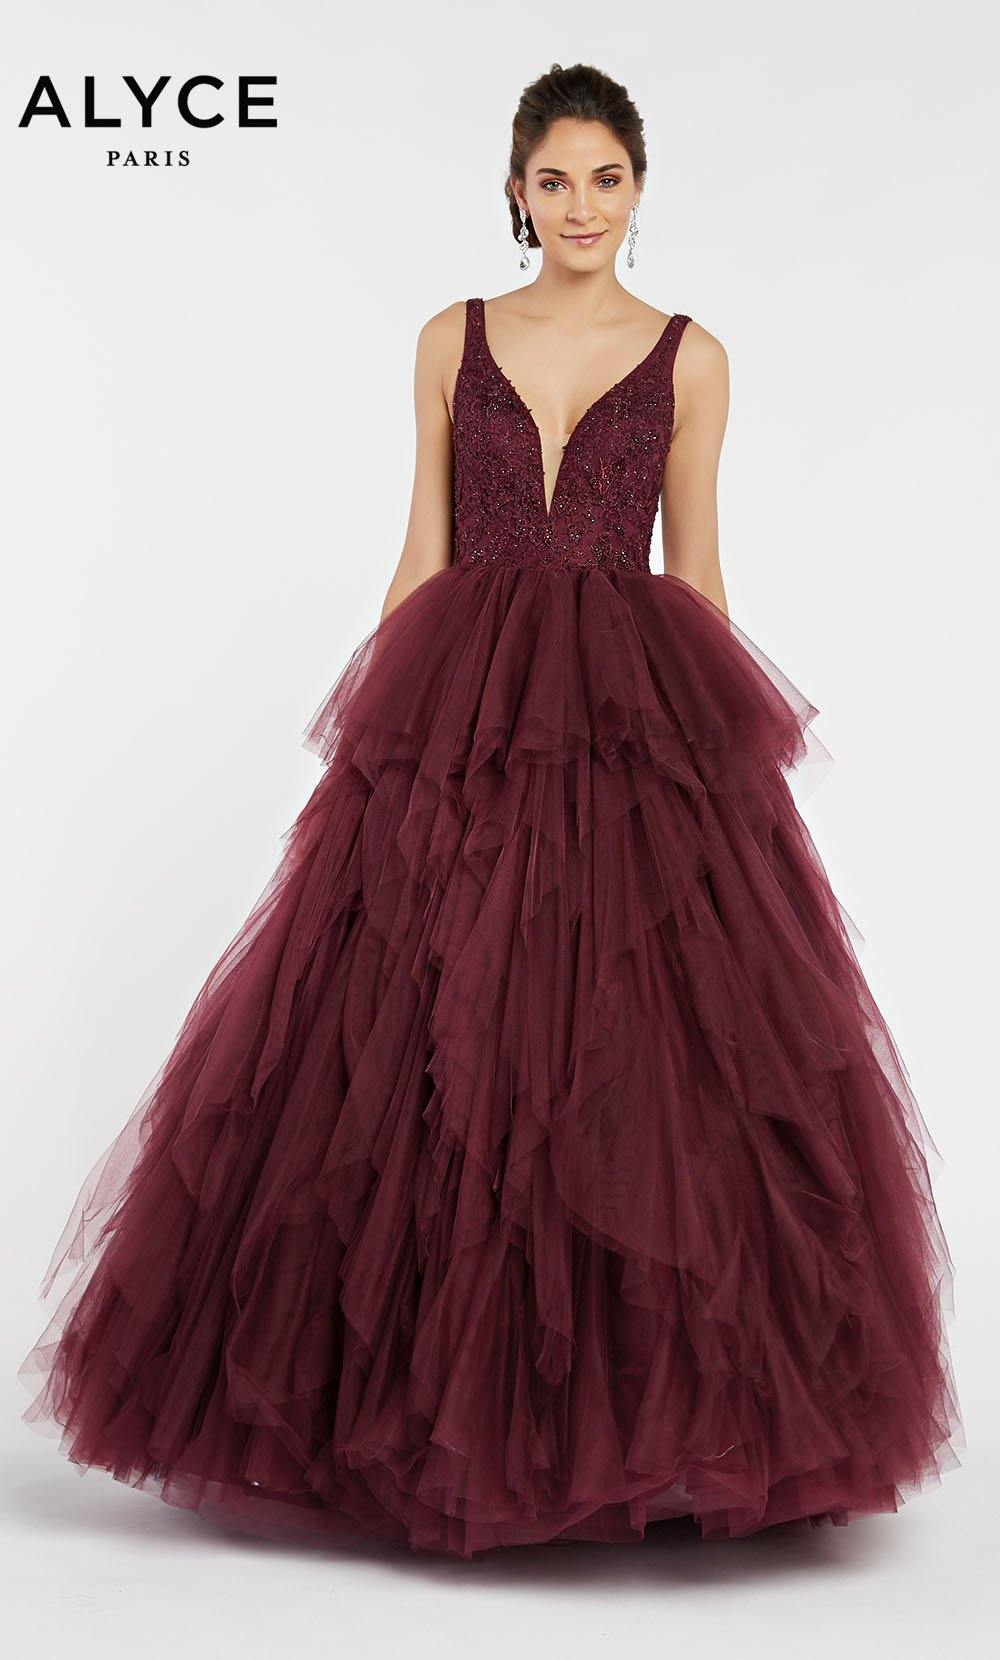 Shop the Look: Quinceañera Dresses - Alyce Paris